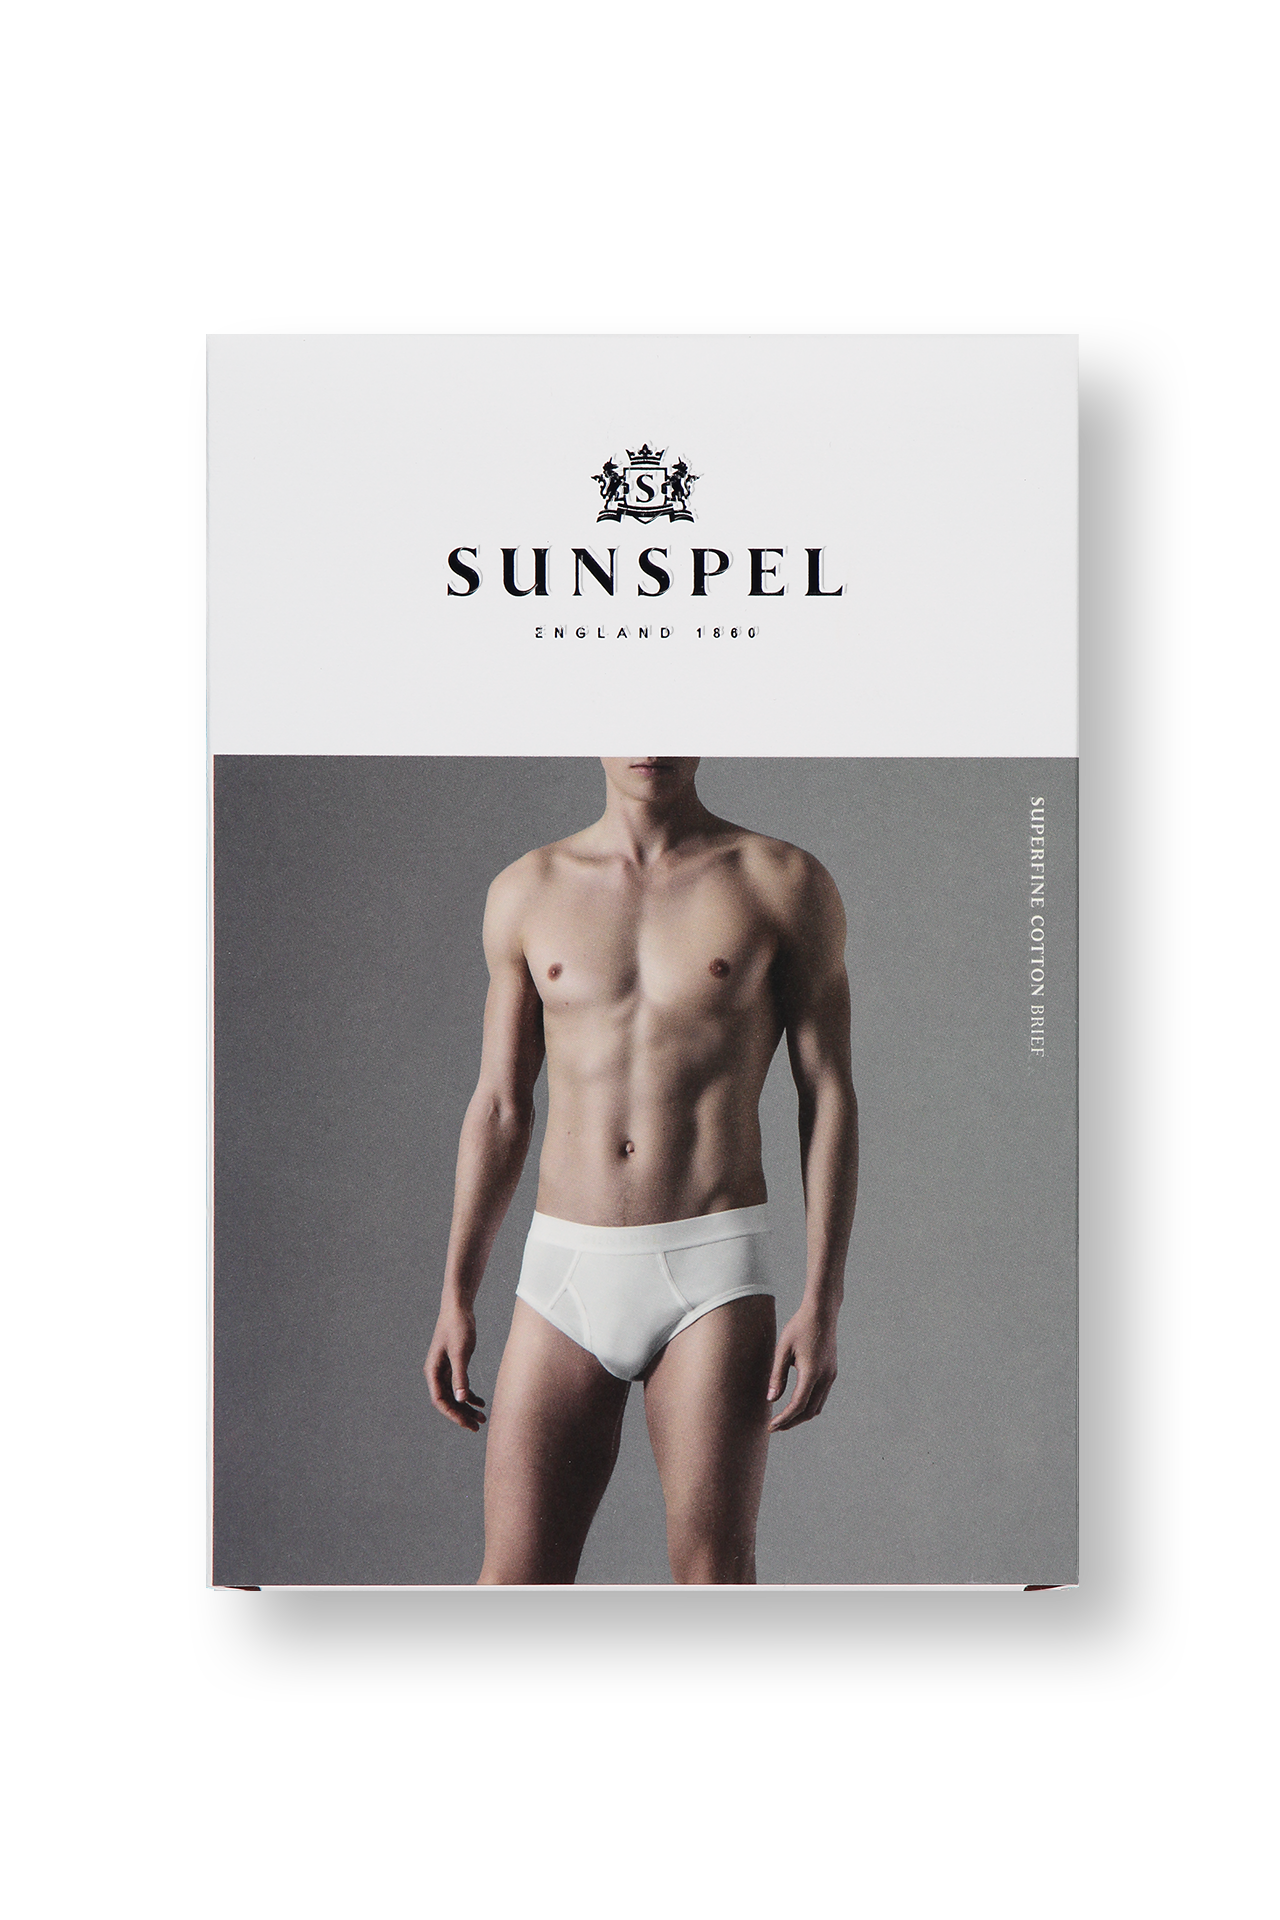 Sunspel Superfine Brief in White - Packaging Image (4371184844915)